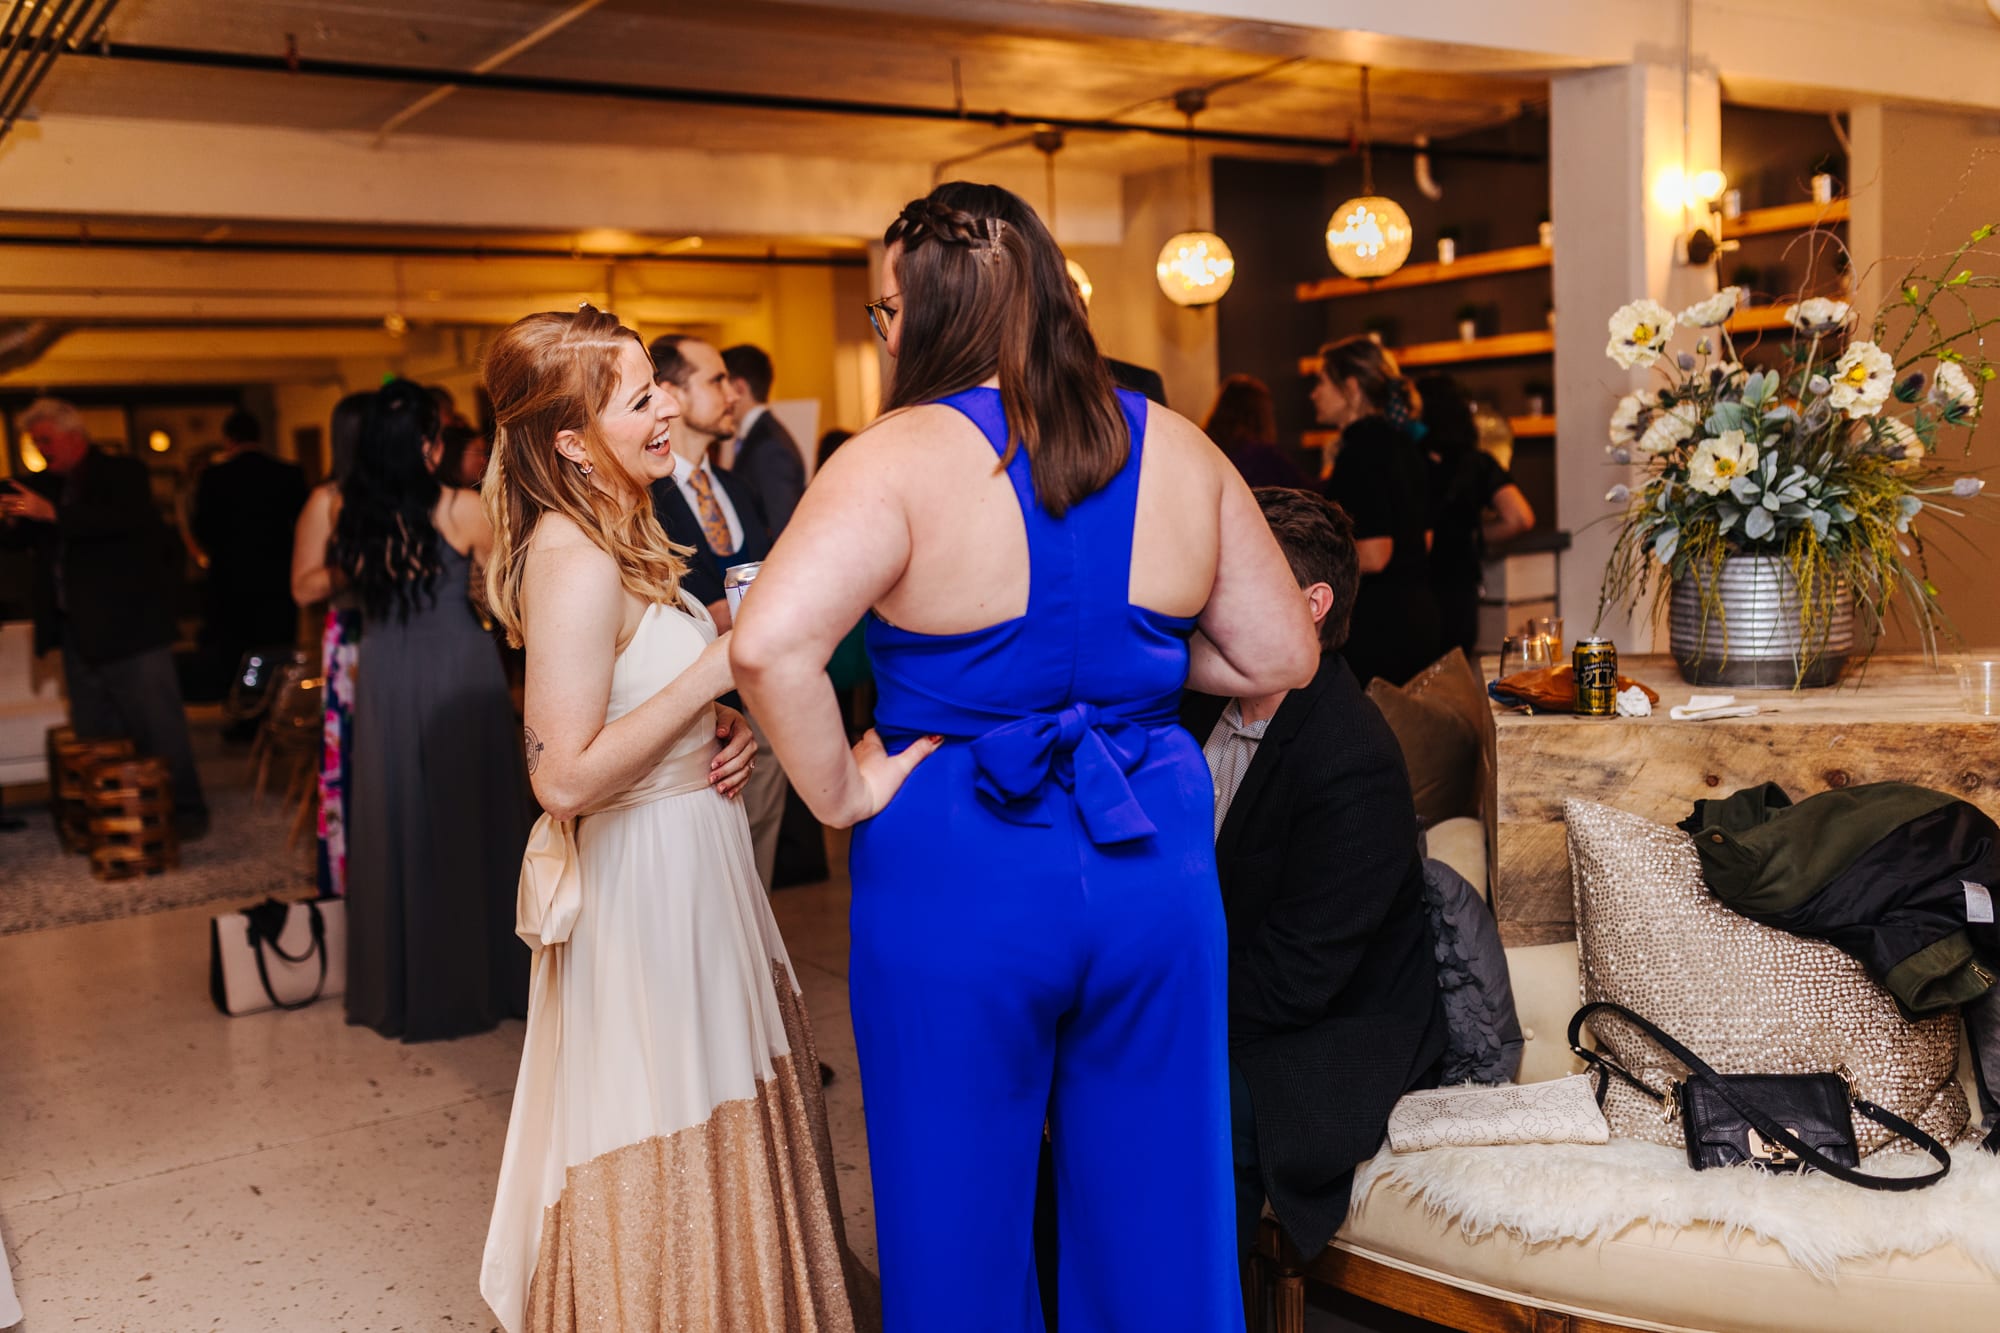 blue jumpsuit, cocktail hour at wedding, guest candids at wedding, guests mingling at wedding, cocktail hour candids